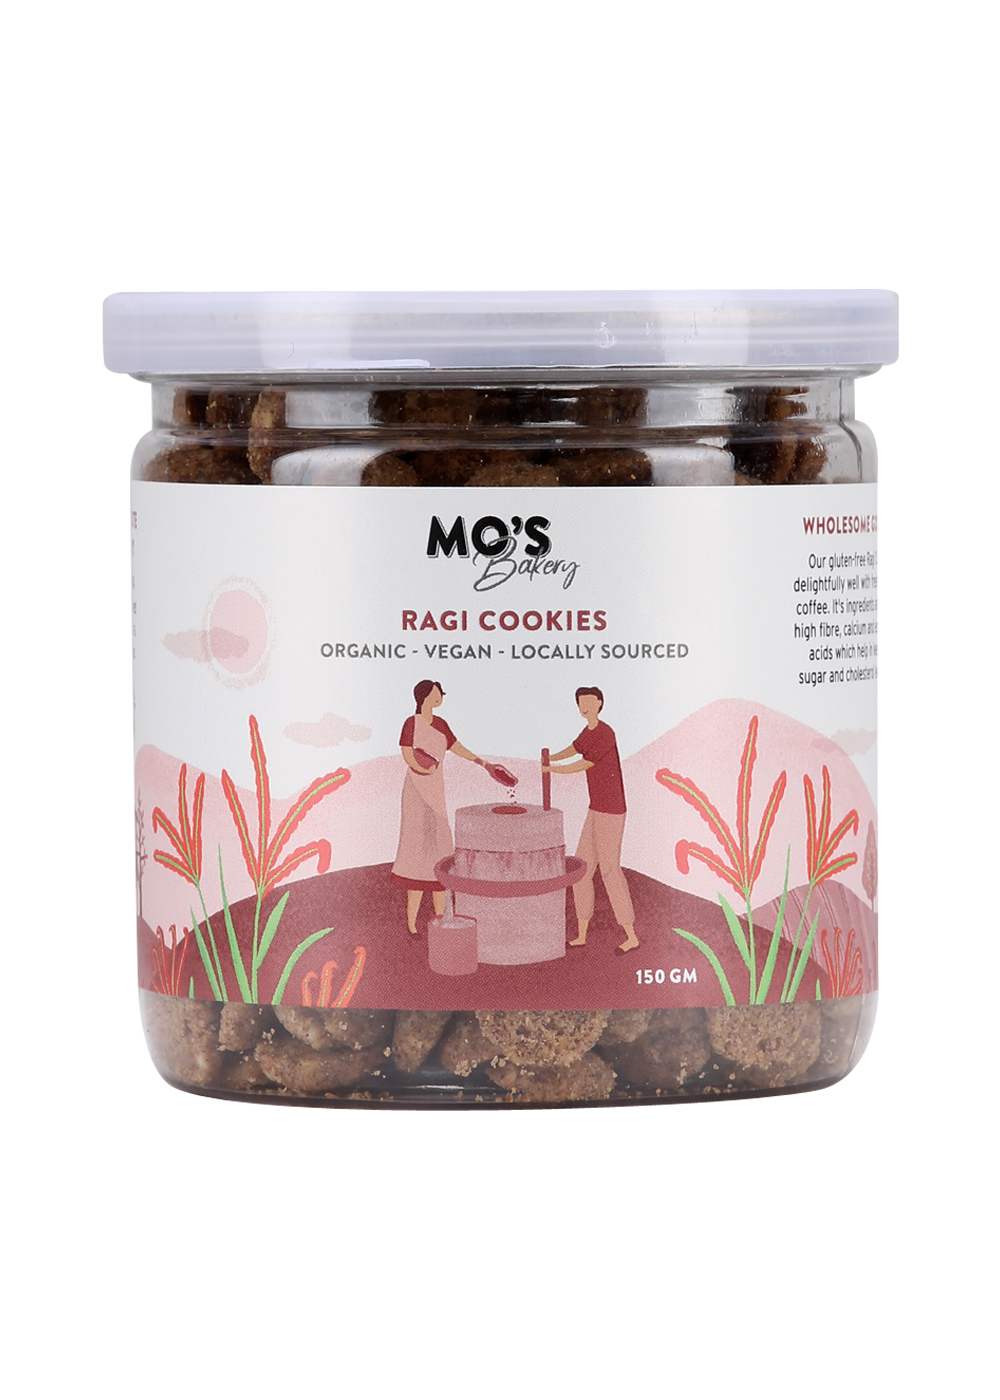 Product: Mo’s Bakery Gluten Free Ragi Cookies